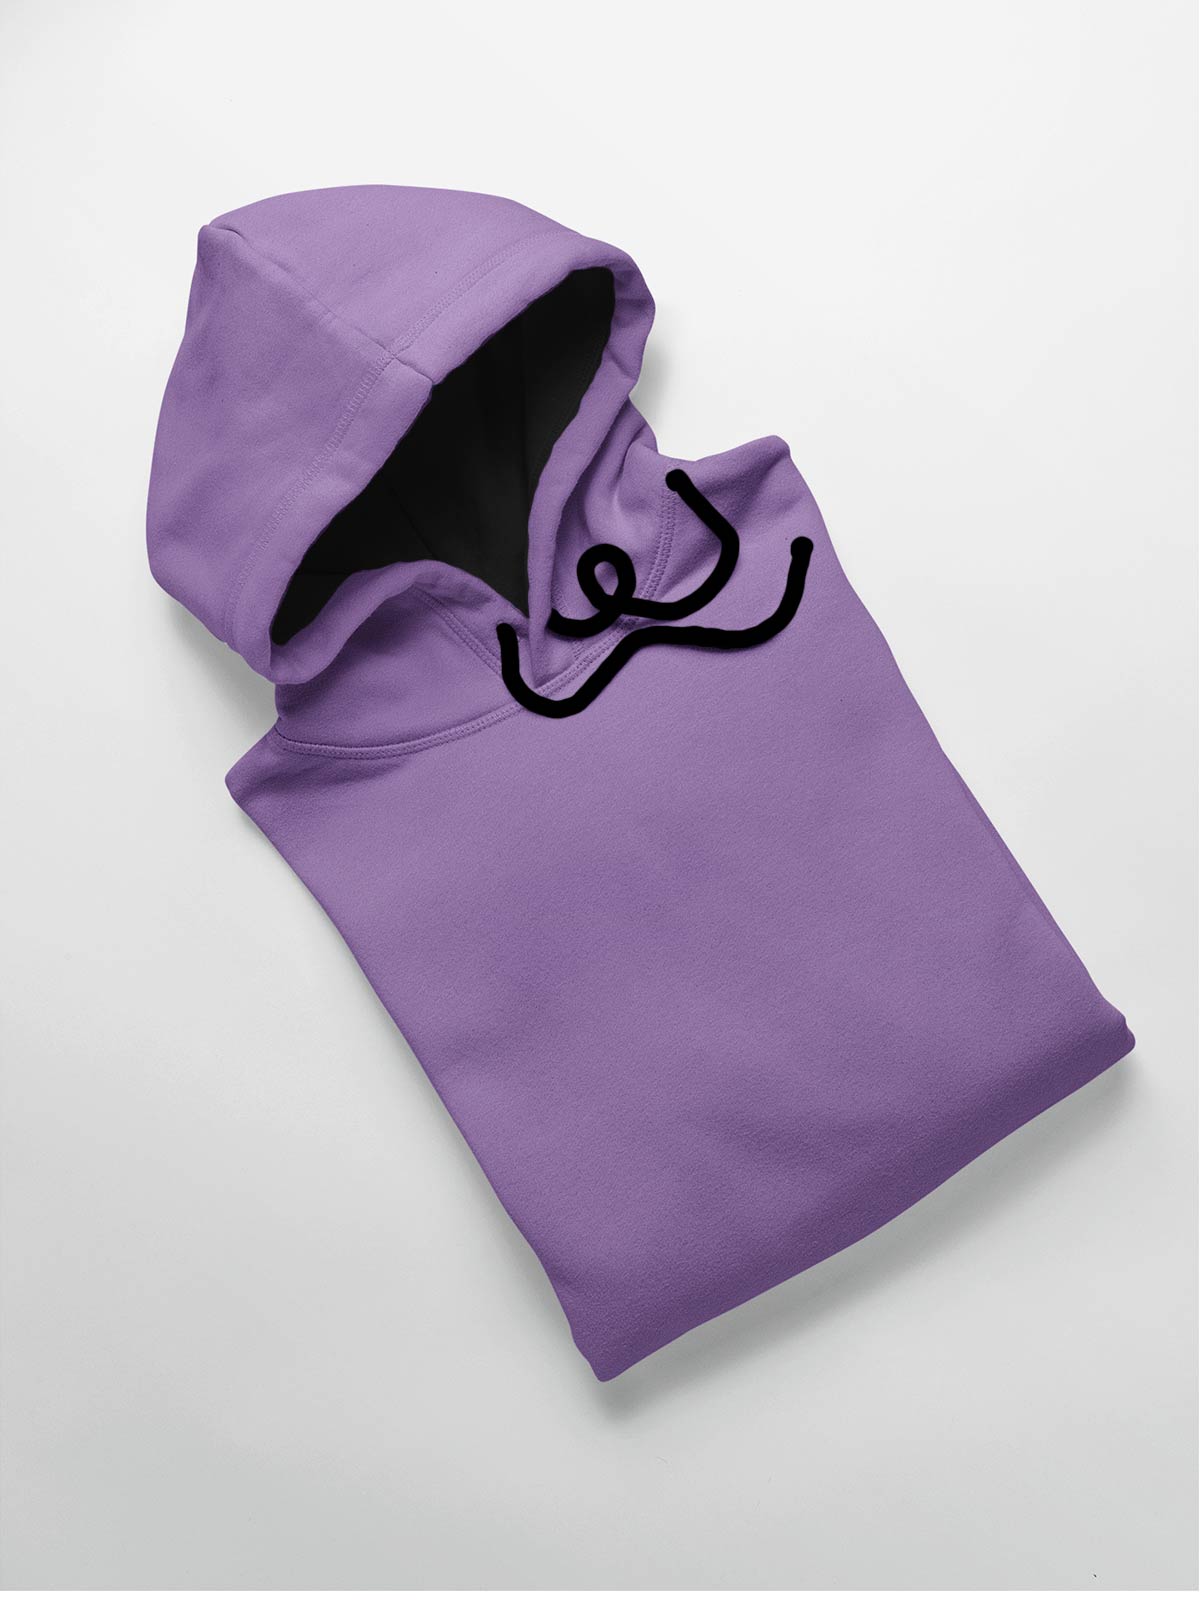 Lavender Plain Cotton Hoodie for Men & Women by shopghumakkad